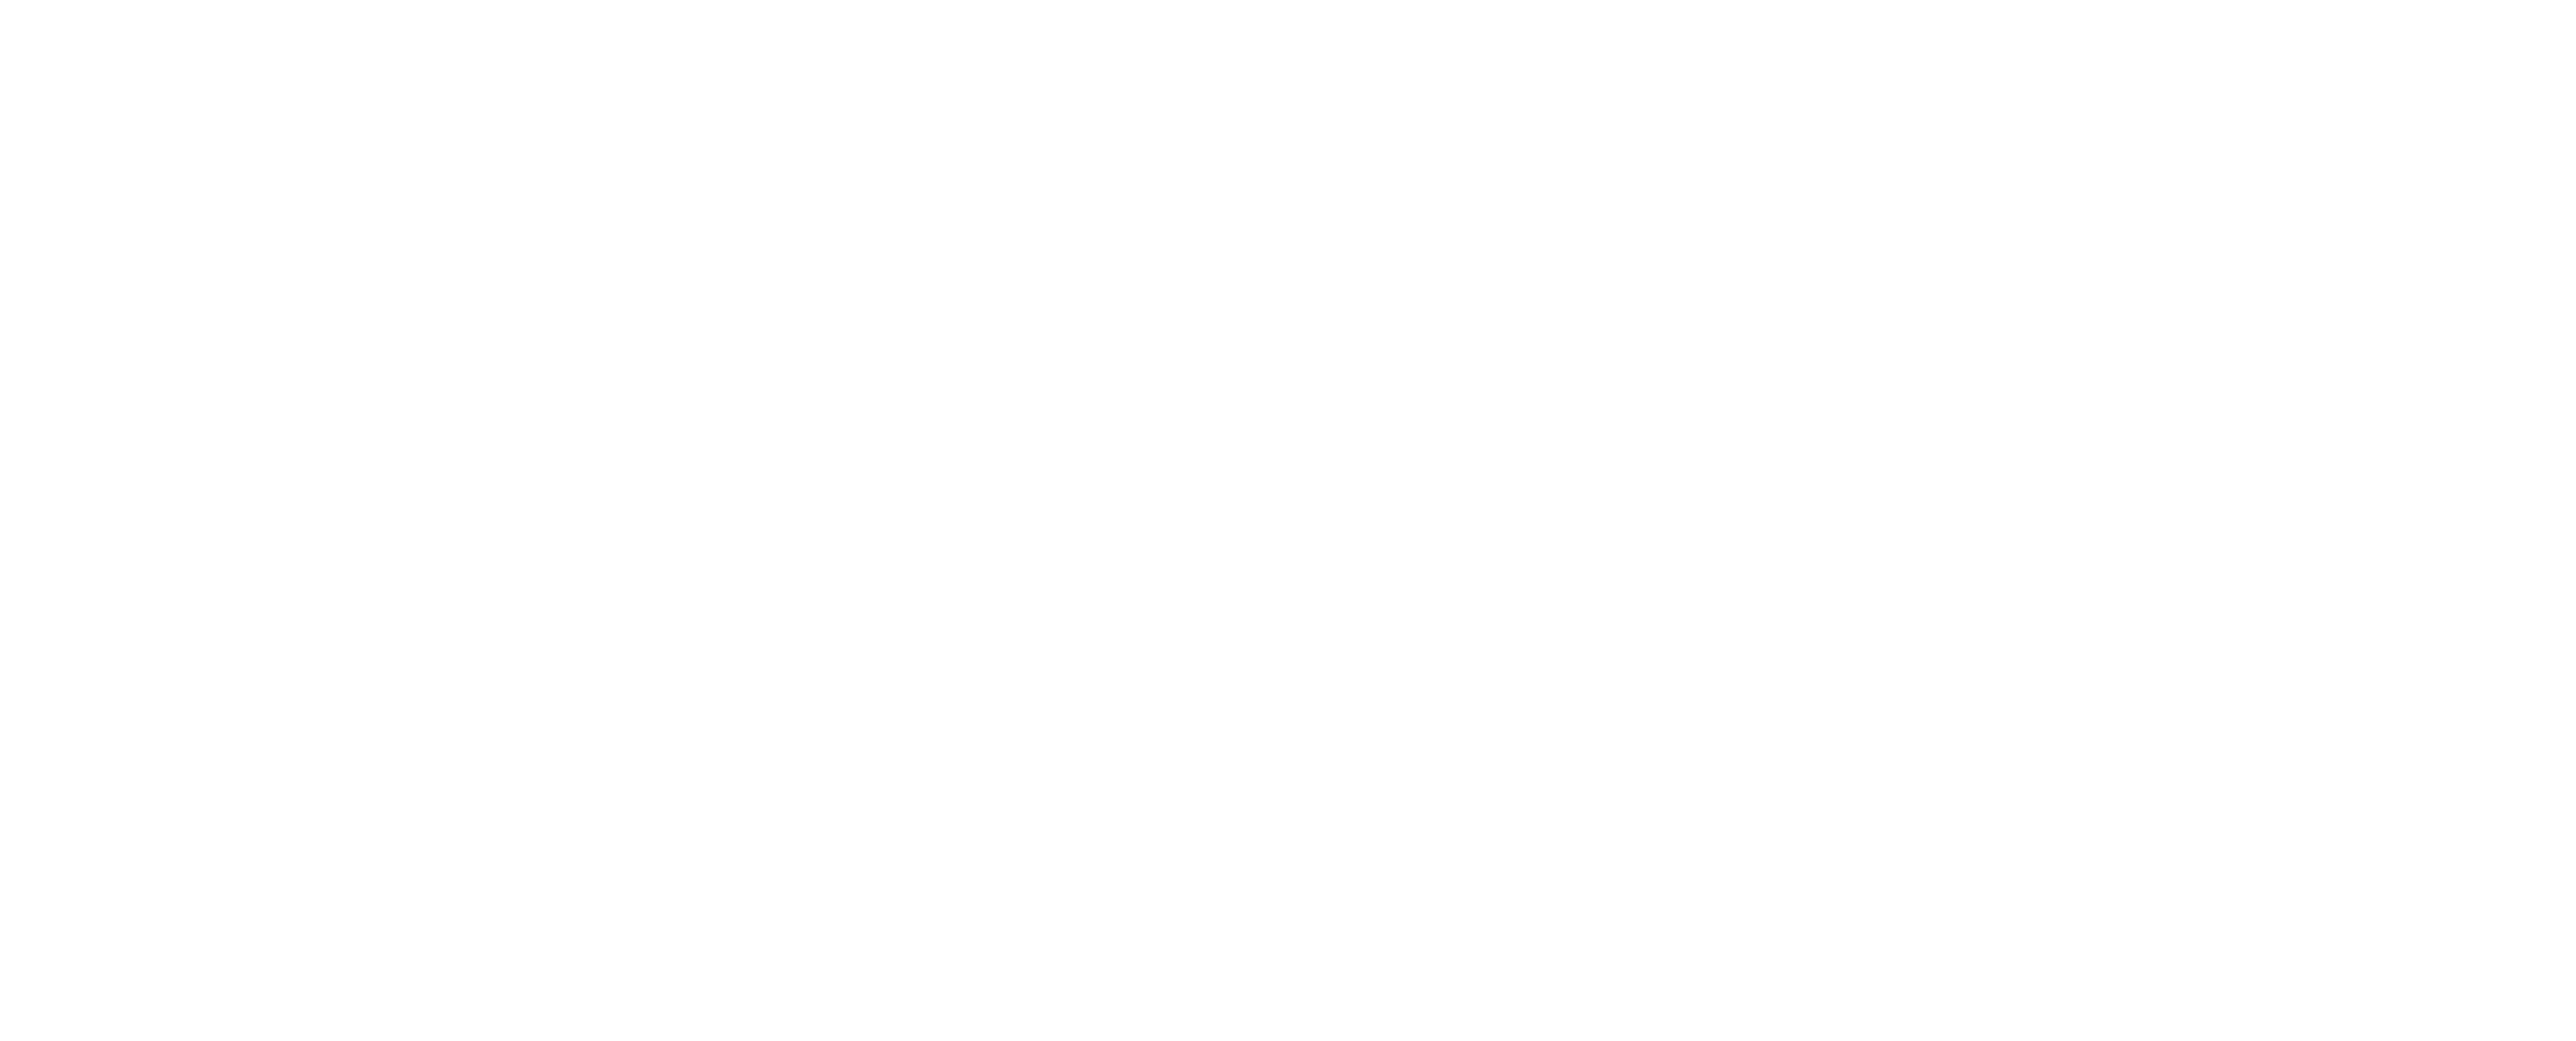 The Great Room | South Bridge logo